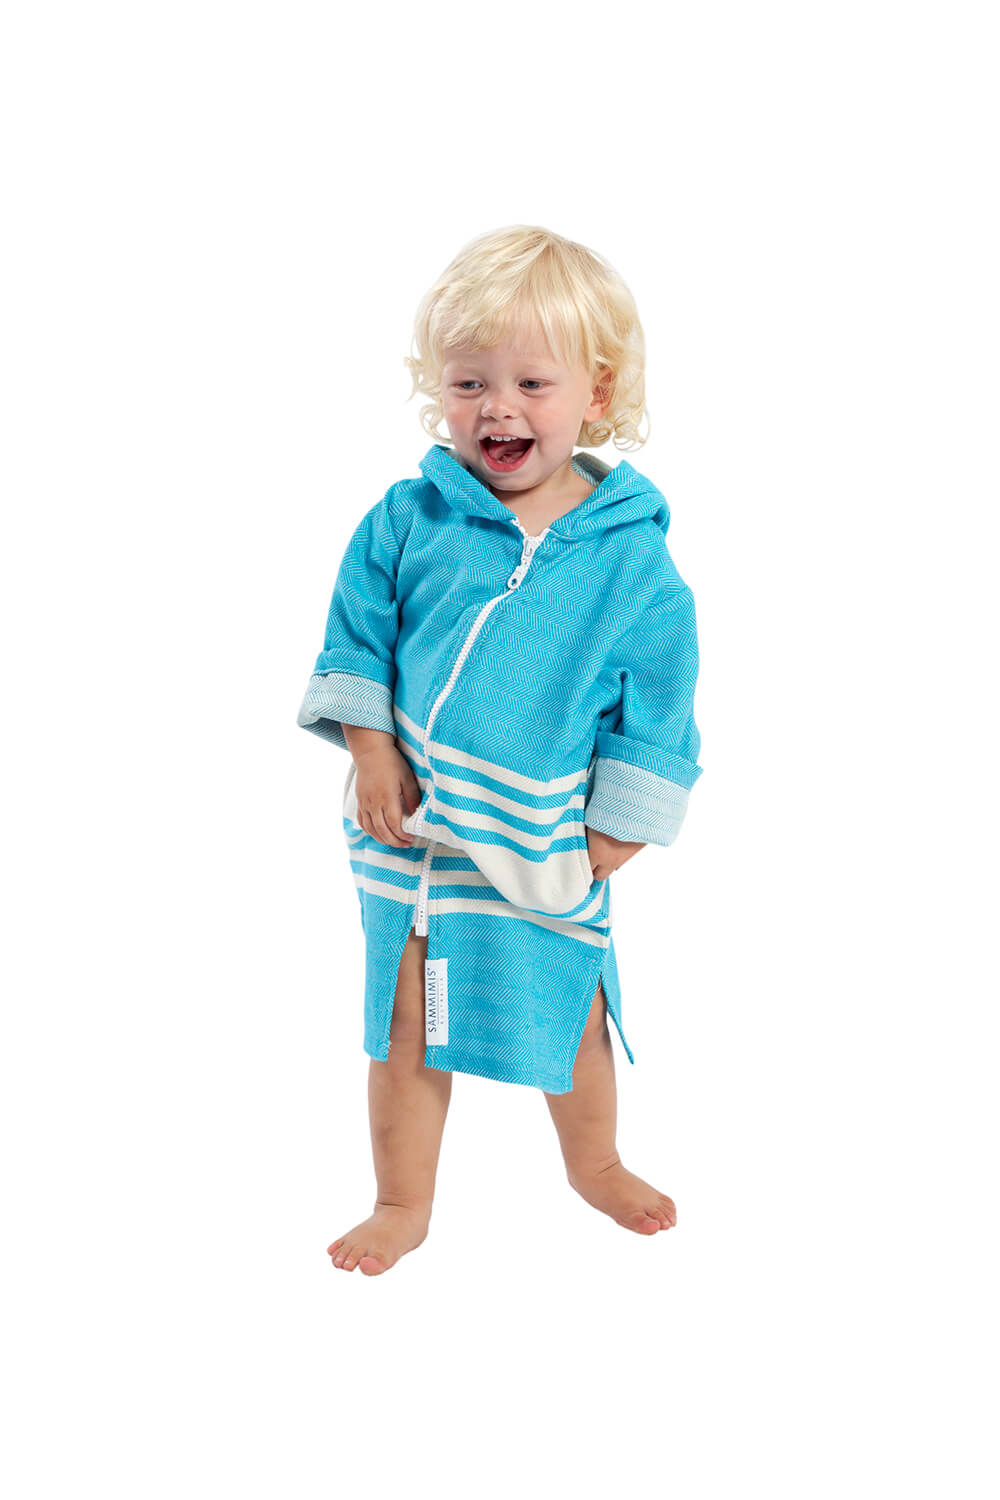 TASSOS Baby Hooded Towel: Aqua/White